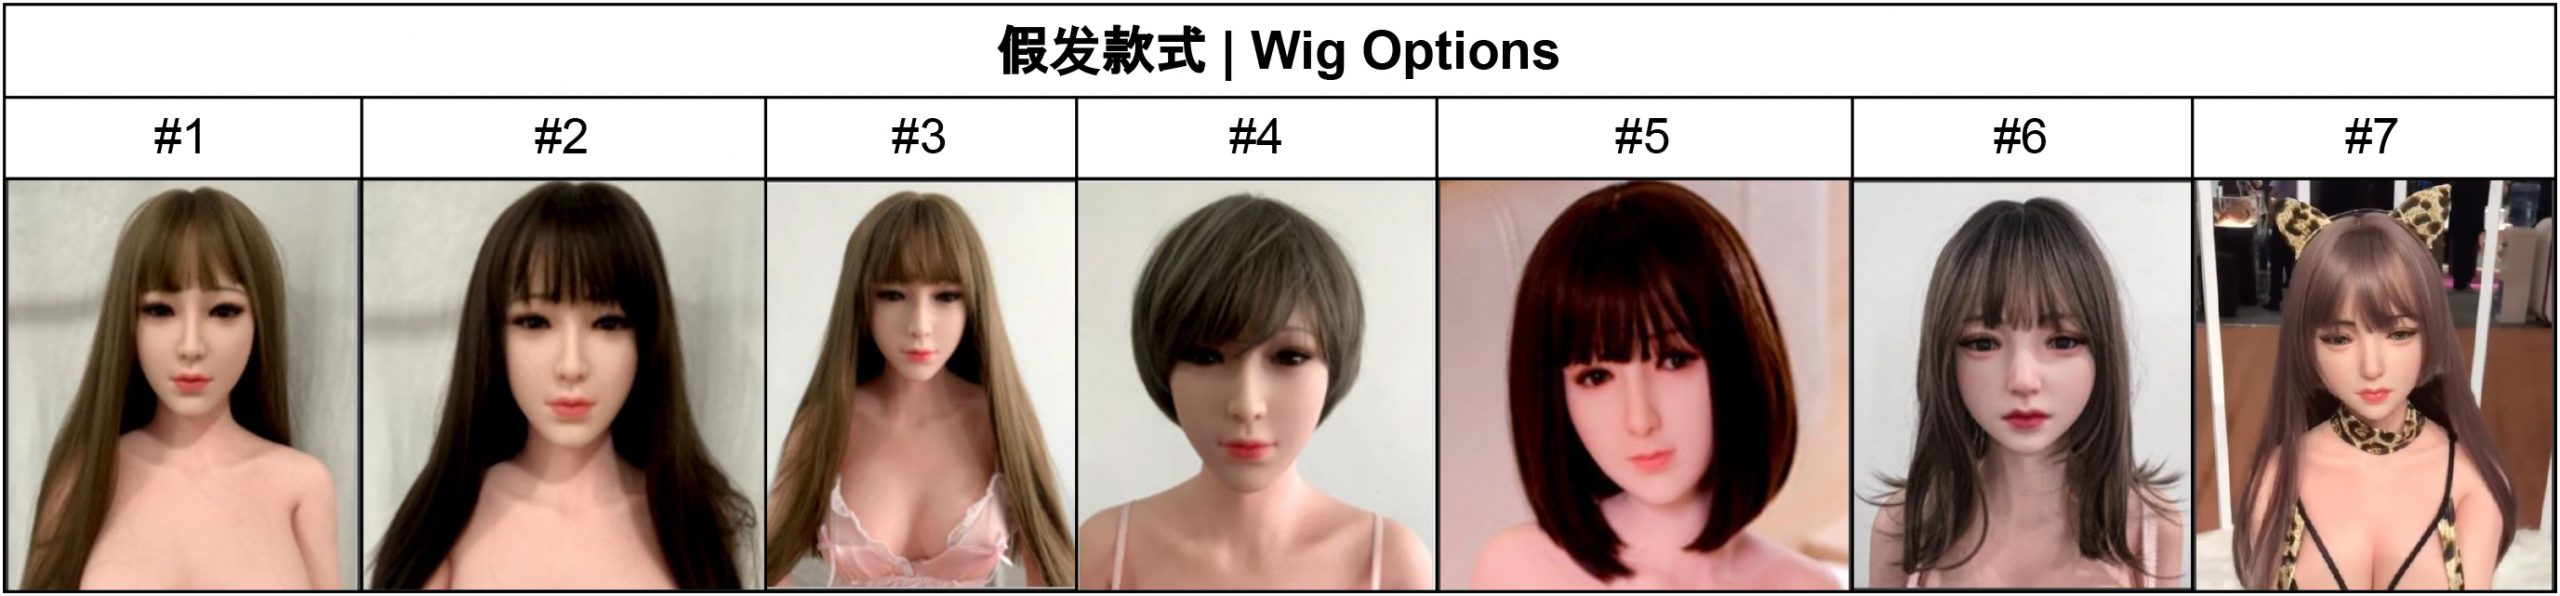 Wigs-scaled.jpg